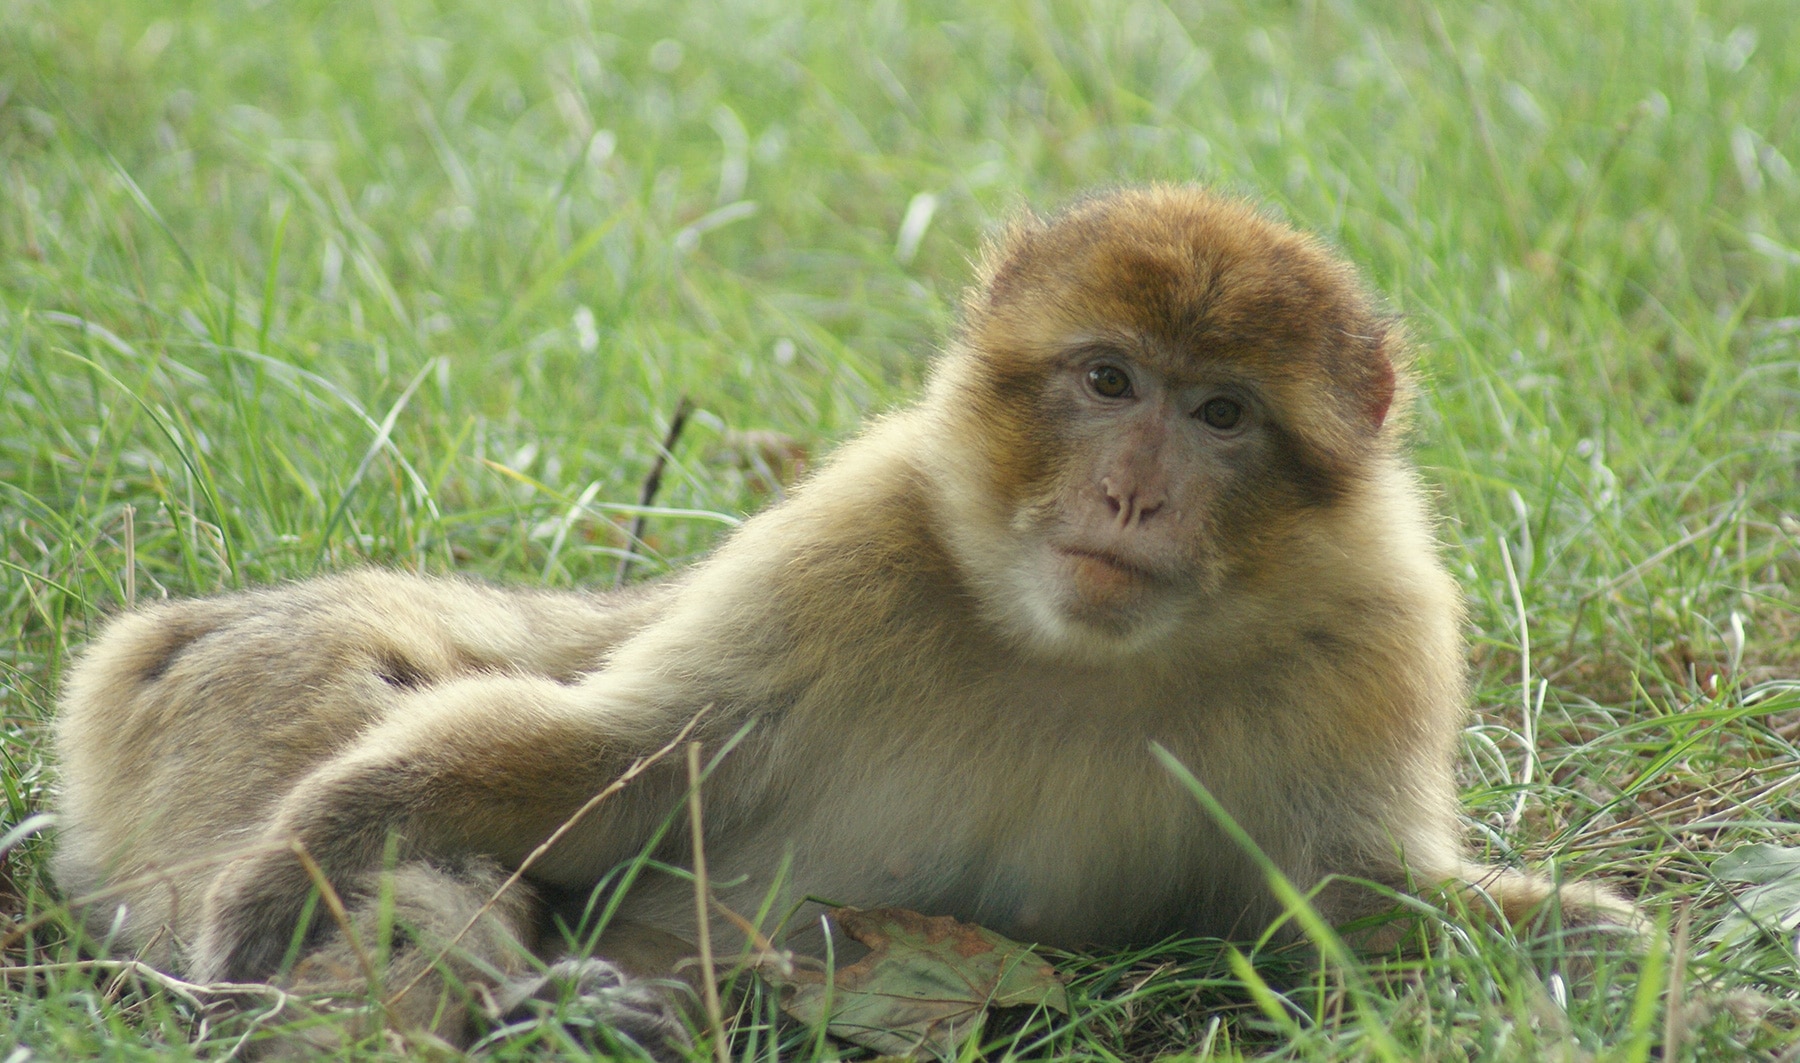 Monkey In Grass